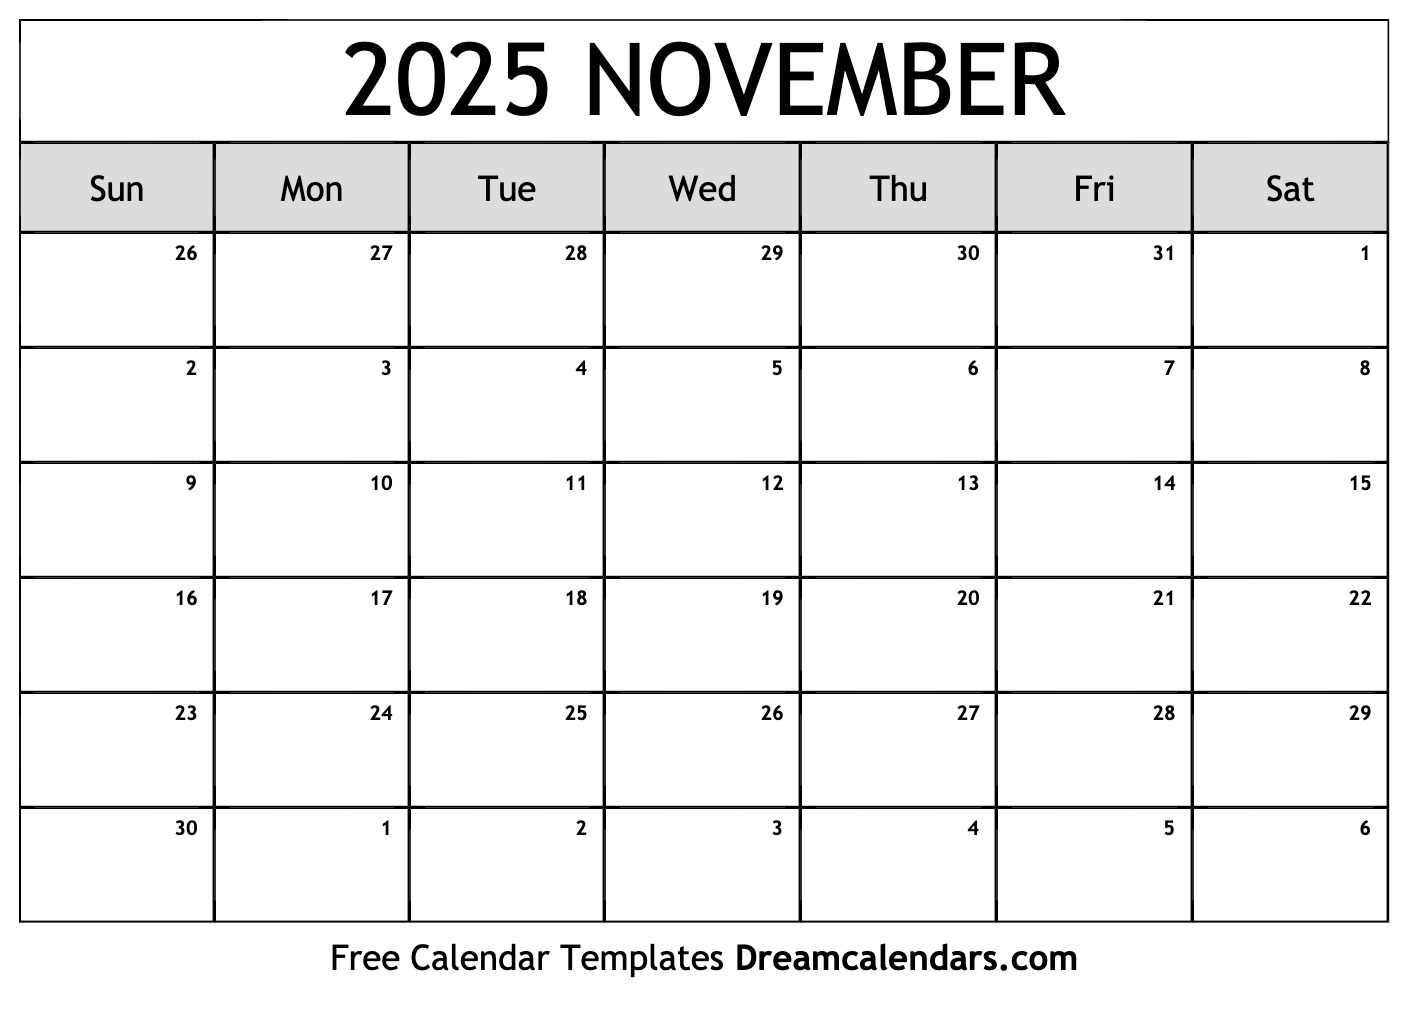 November calendar free blank printable with holidays